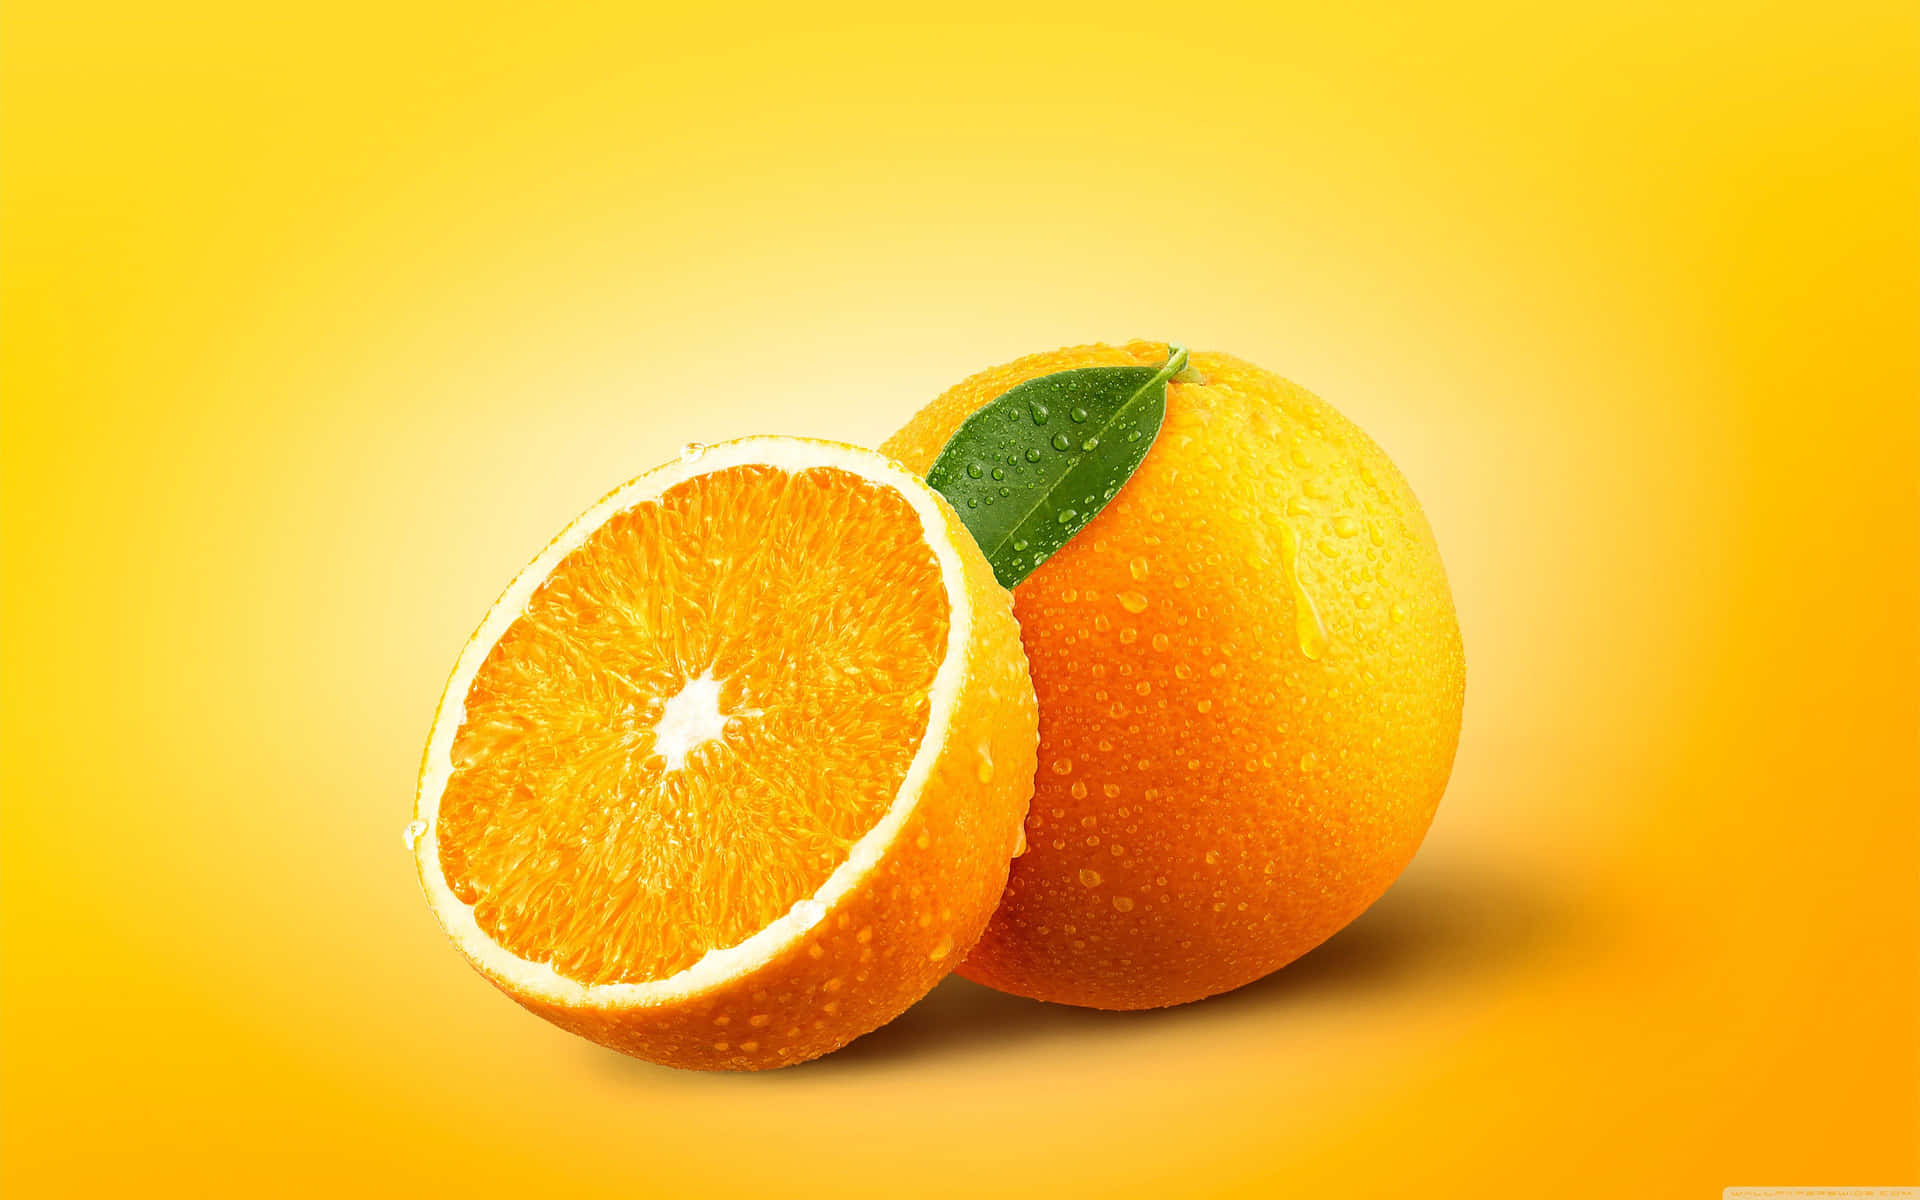 Brighten up your day with an Orange Desktop Wallpaper